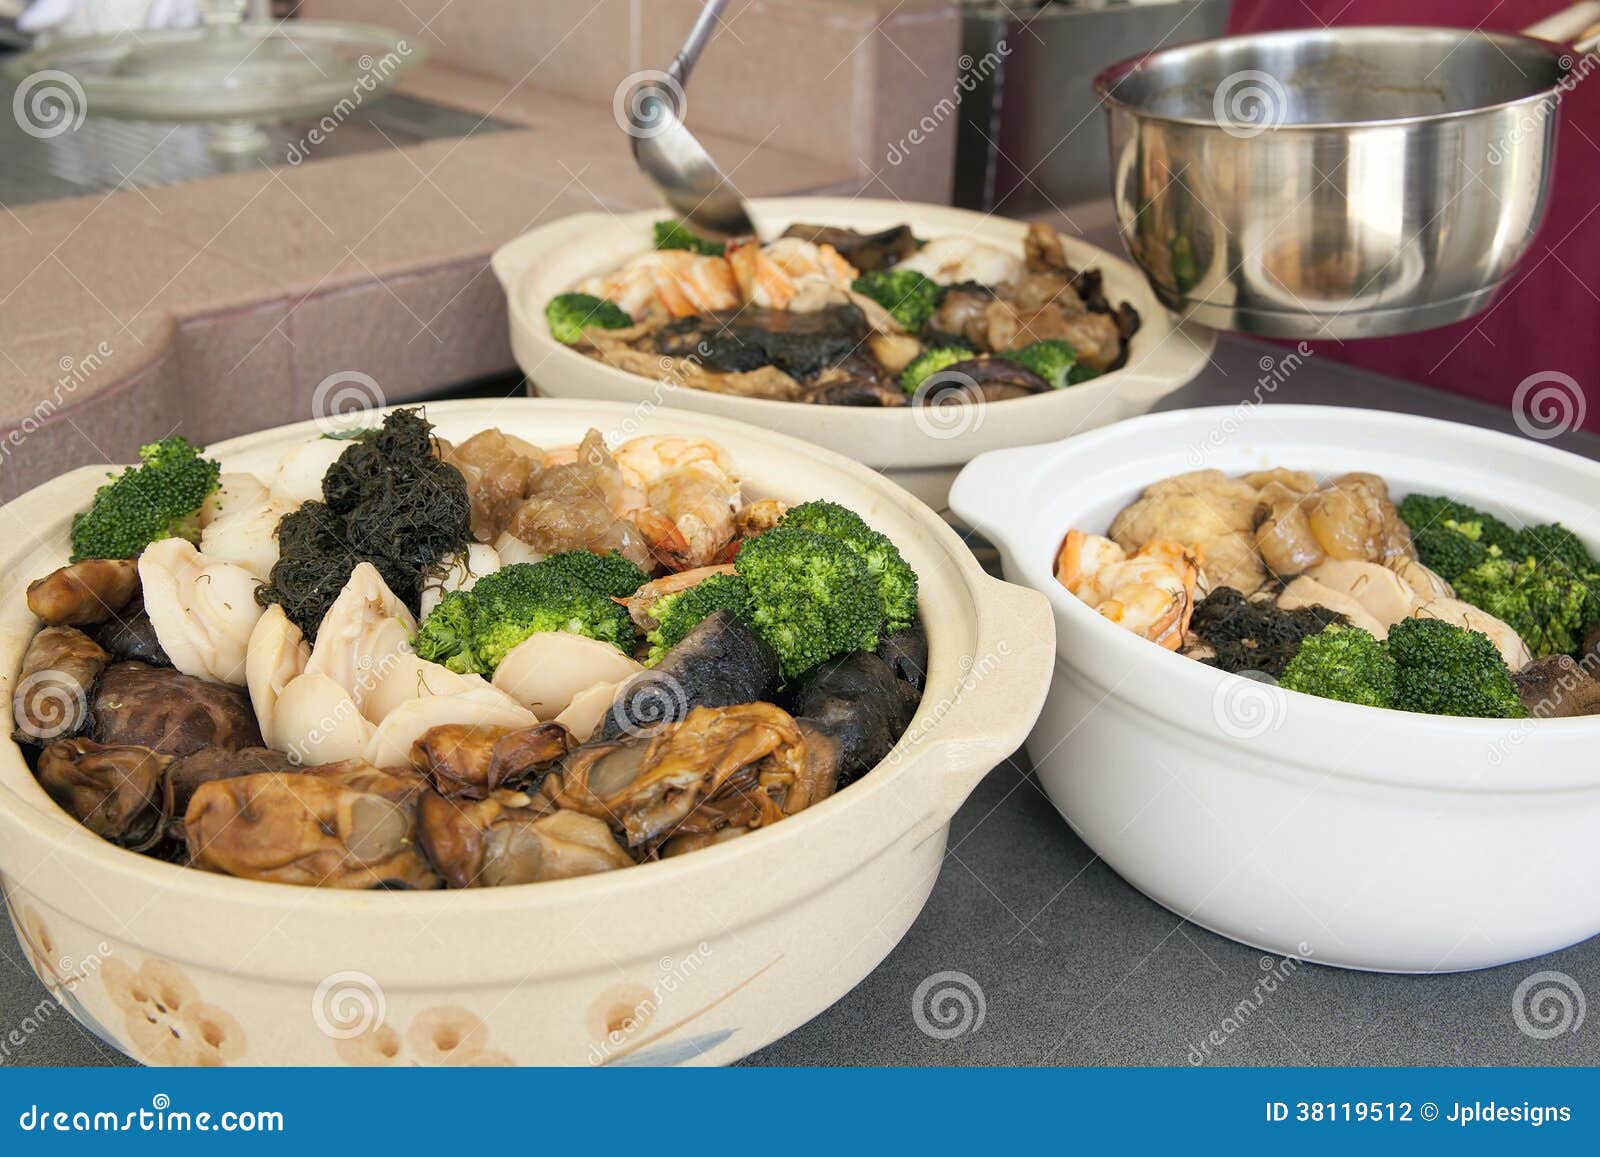 poon choi cantonese big feast bowls preparation